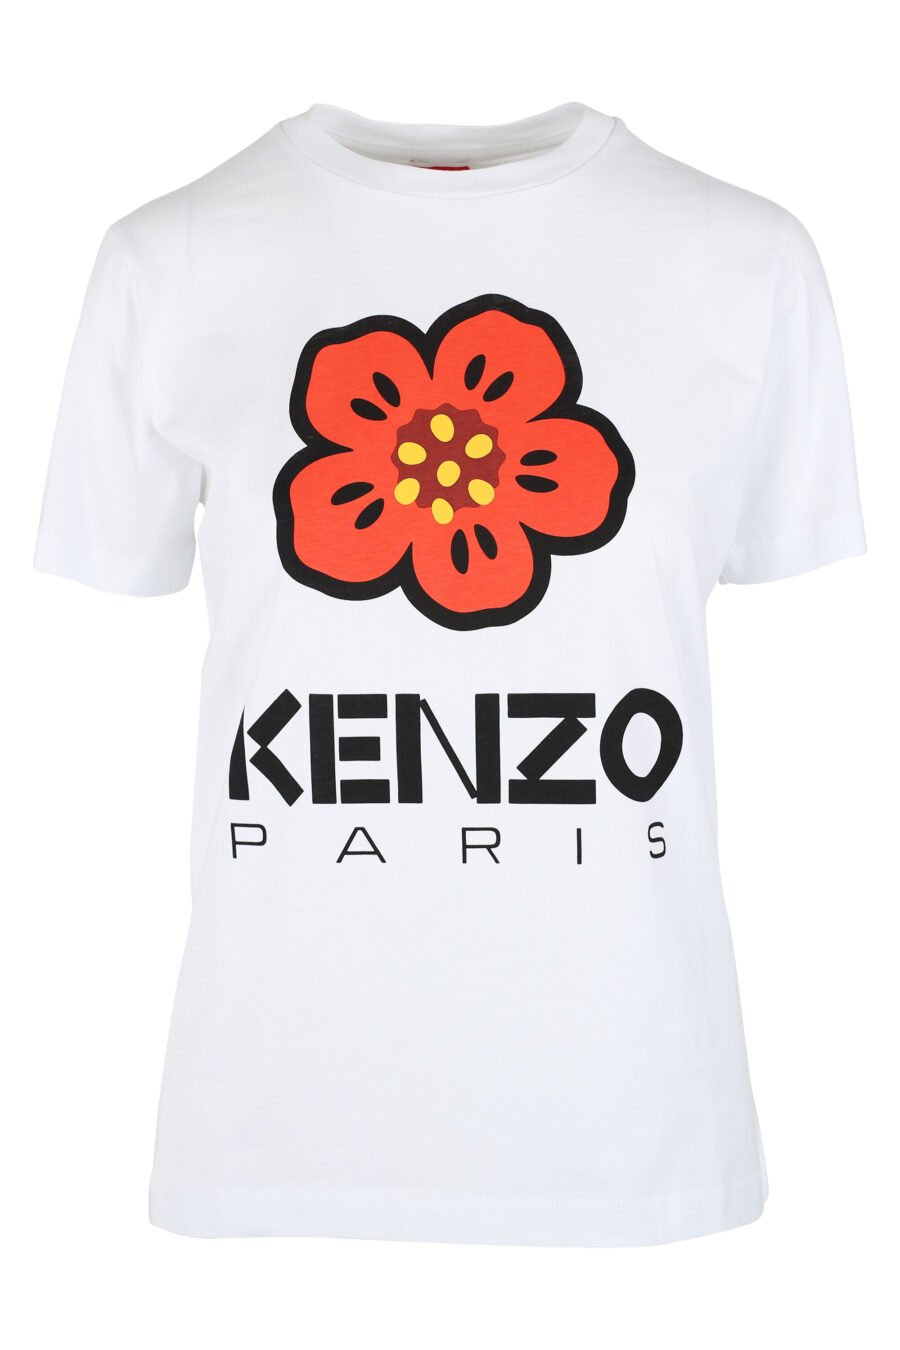 T-shirt branca com maxilogo de flores cor de laranja - IMG 9528